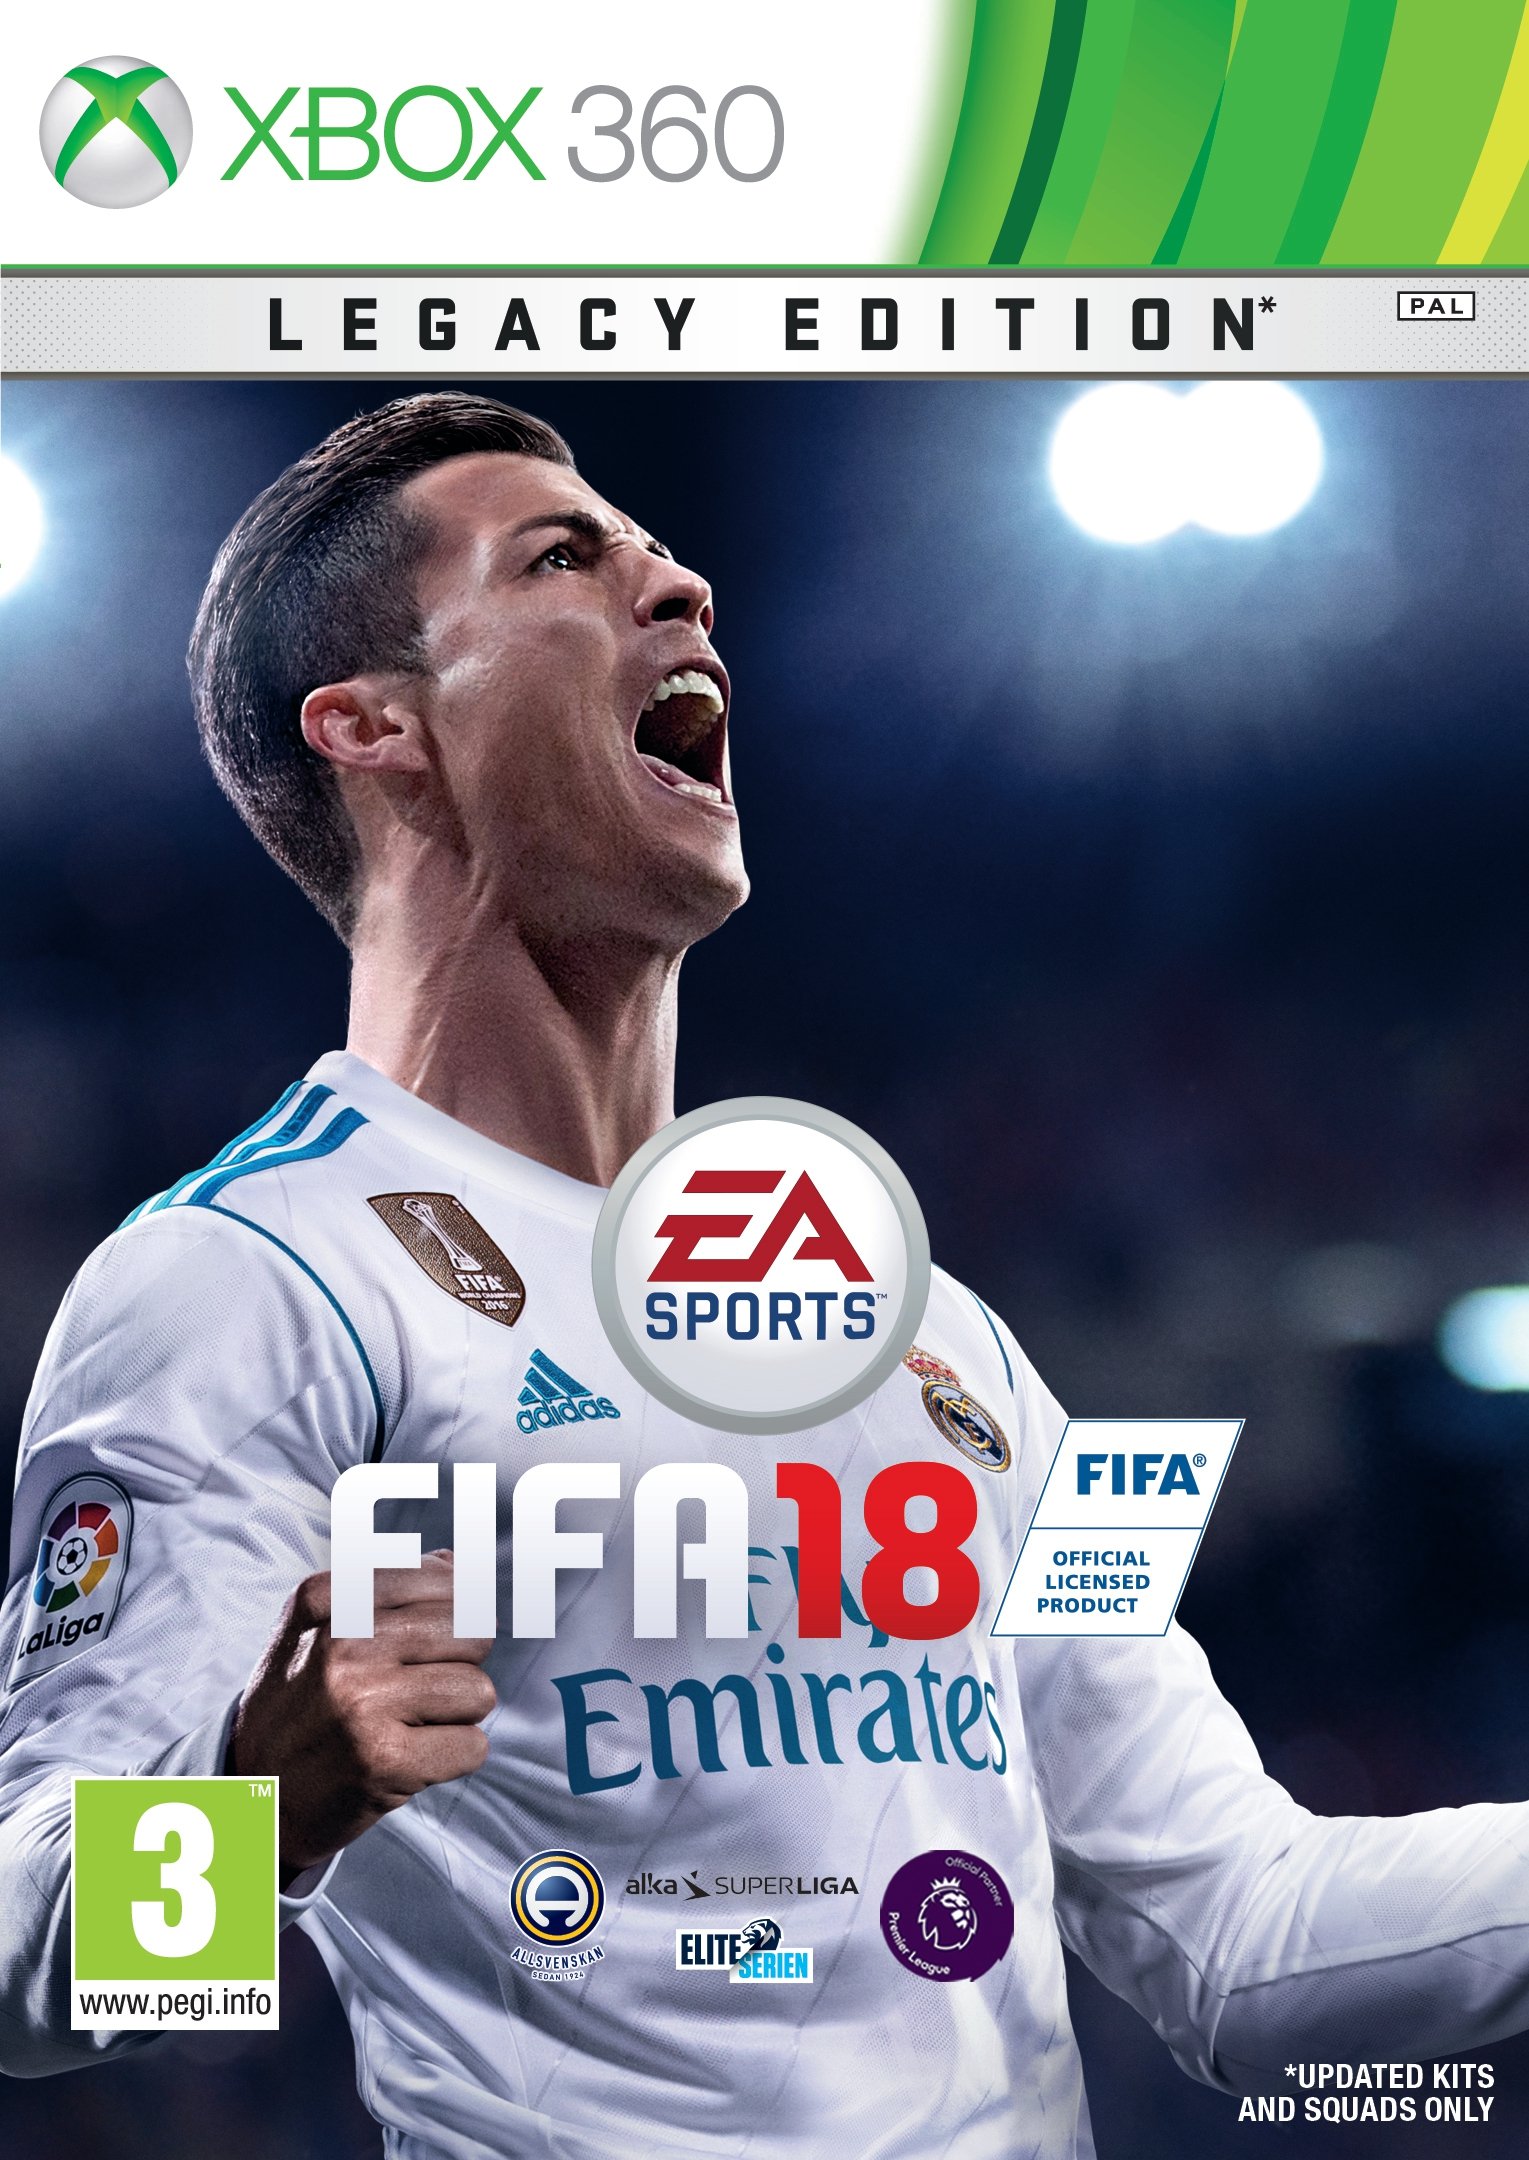 Köp FIFA 18 - Edition (Nordic)